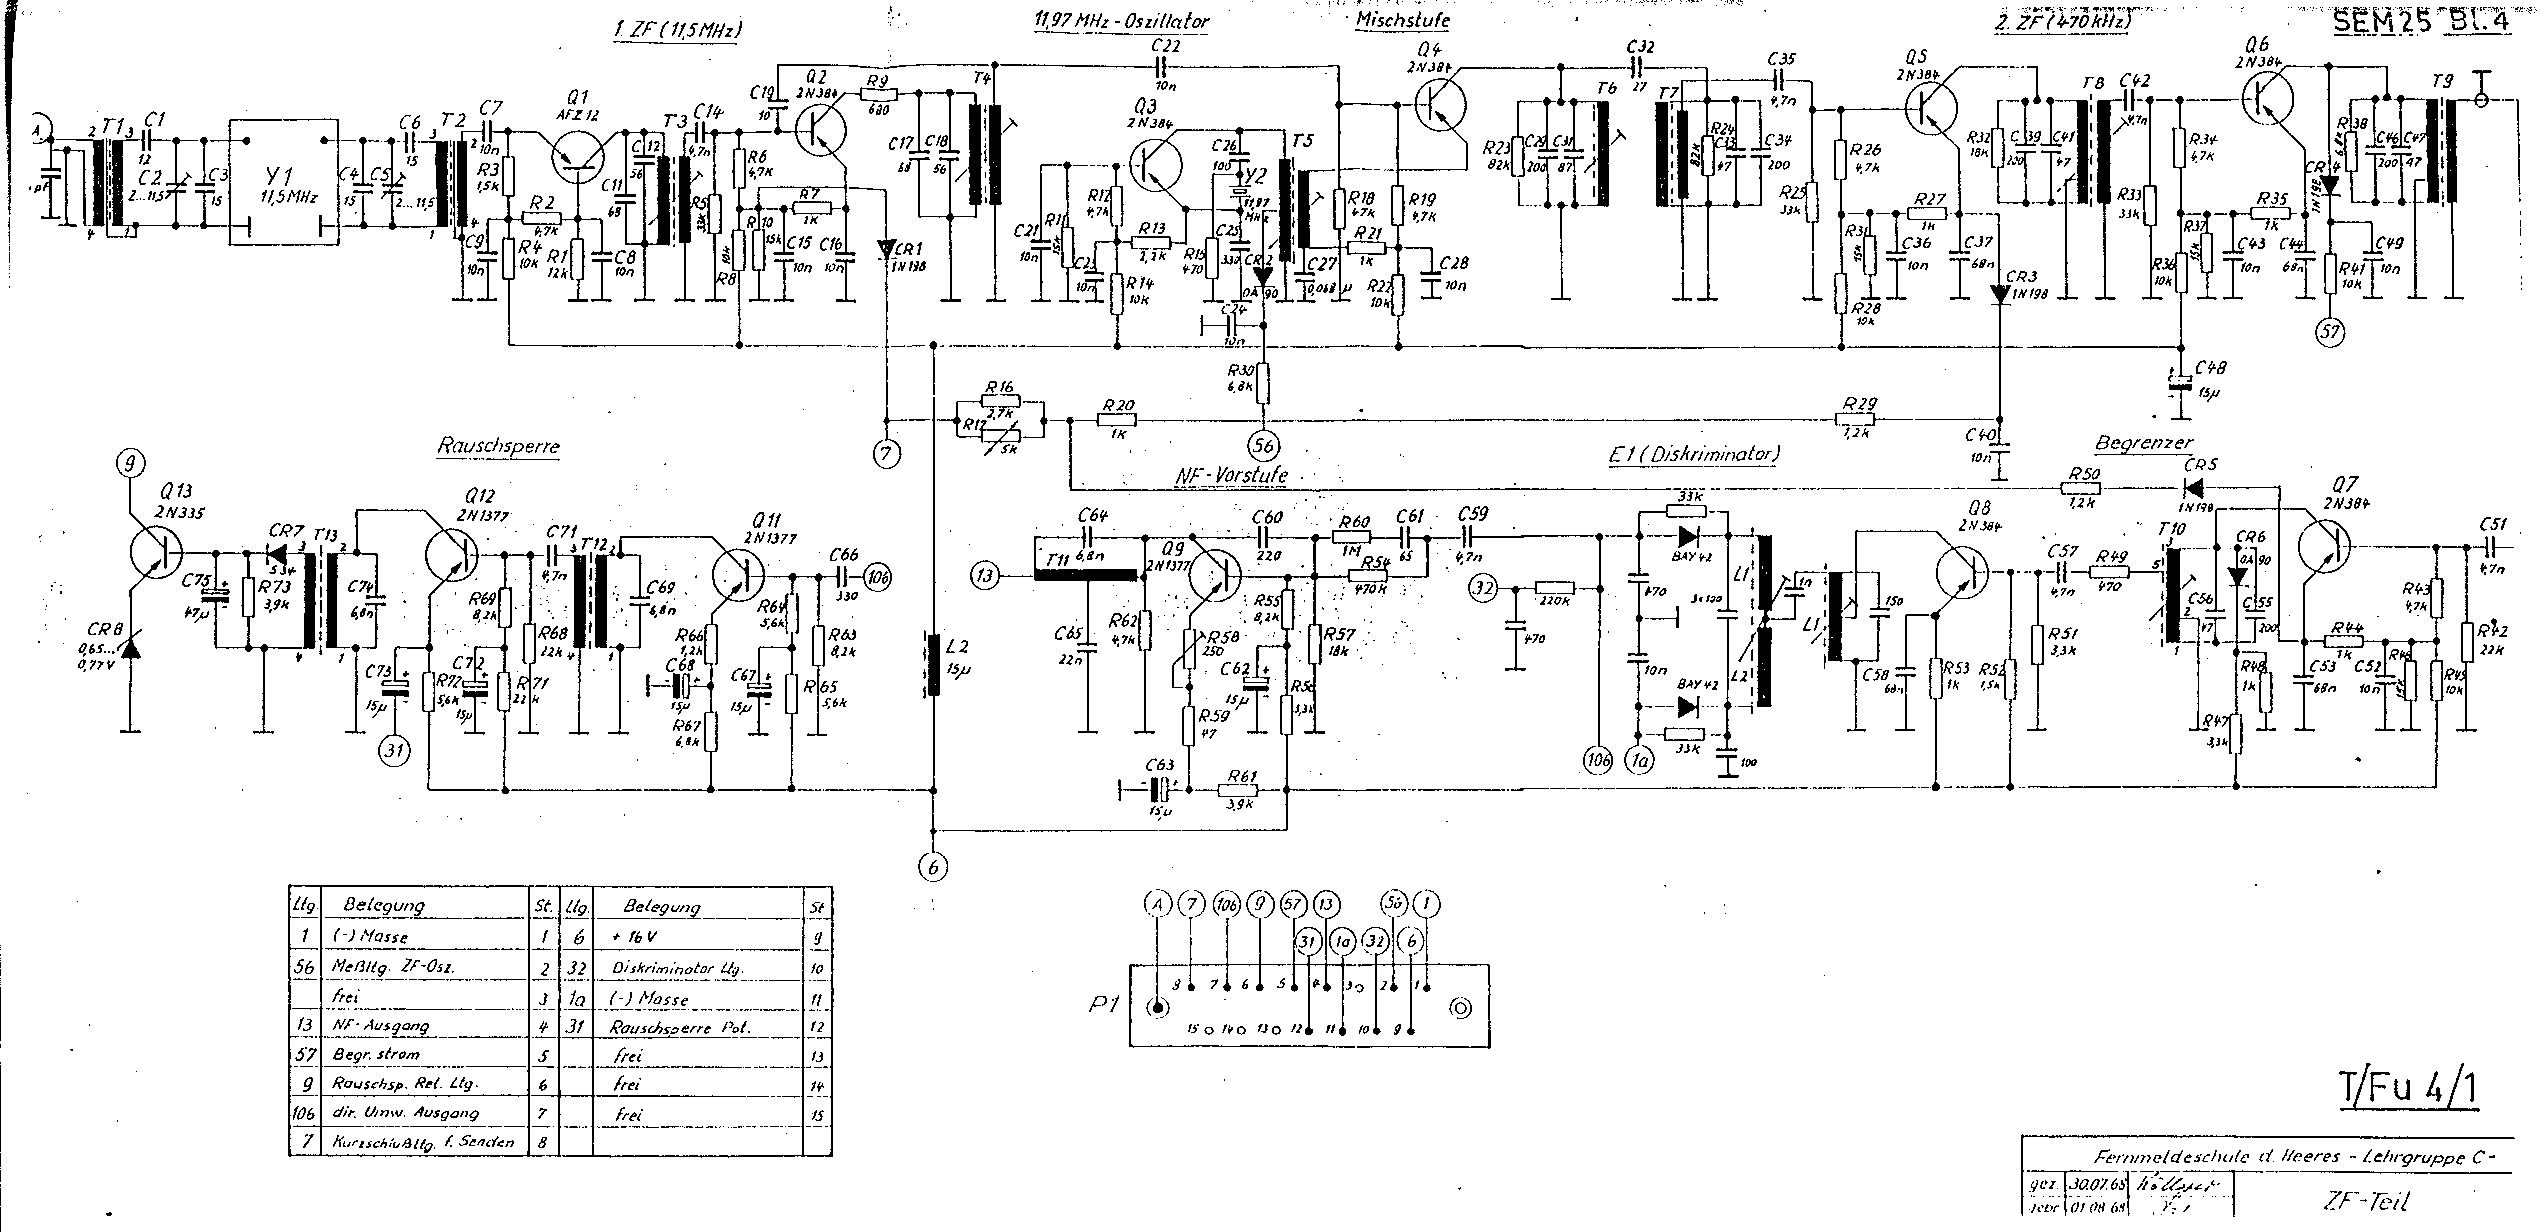 logitech z 5300 wiring diagram